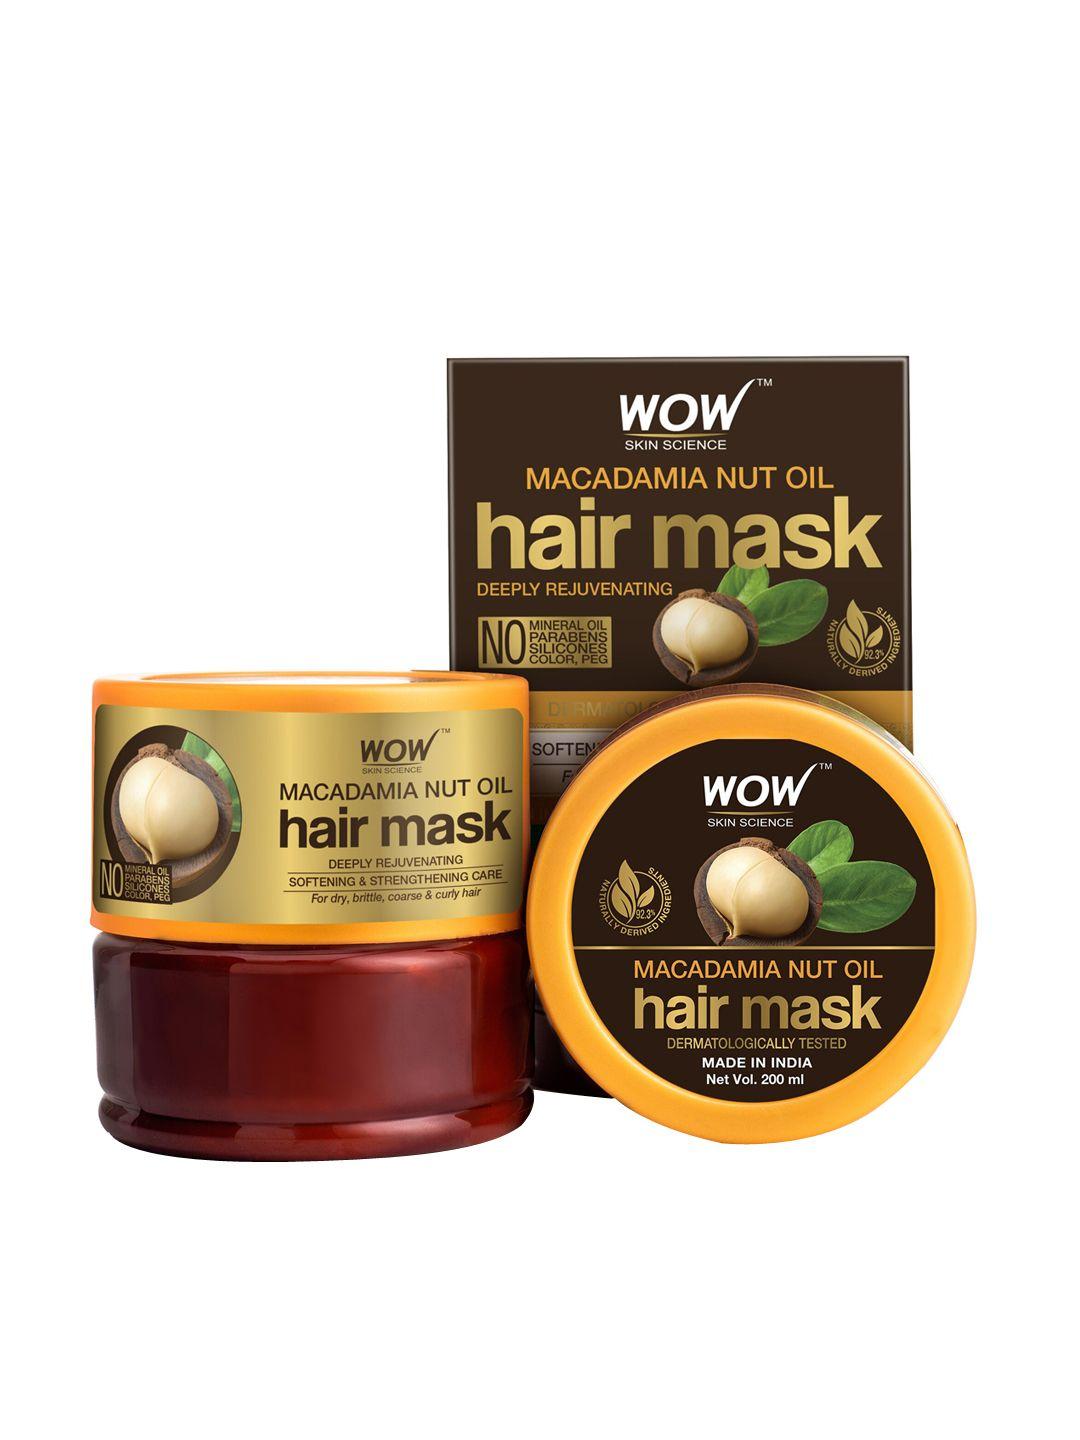 wow skin science deeply rejuvenating macadamia nut oil hair mask - 200 ml